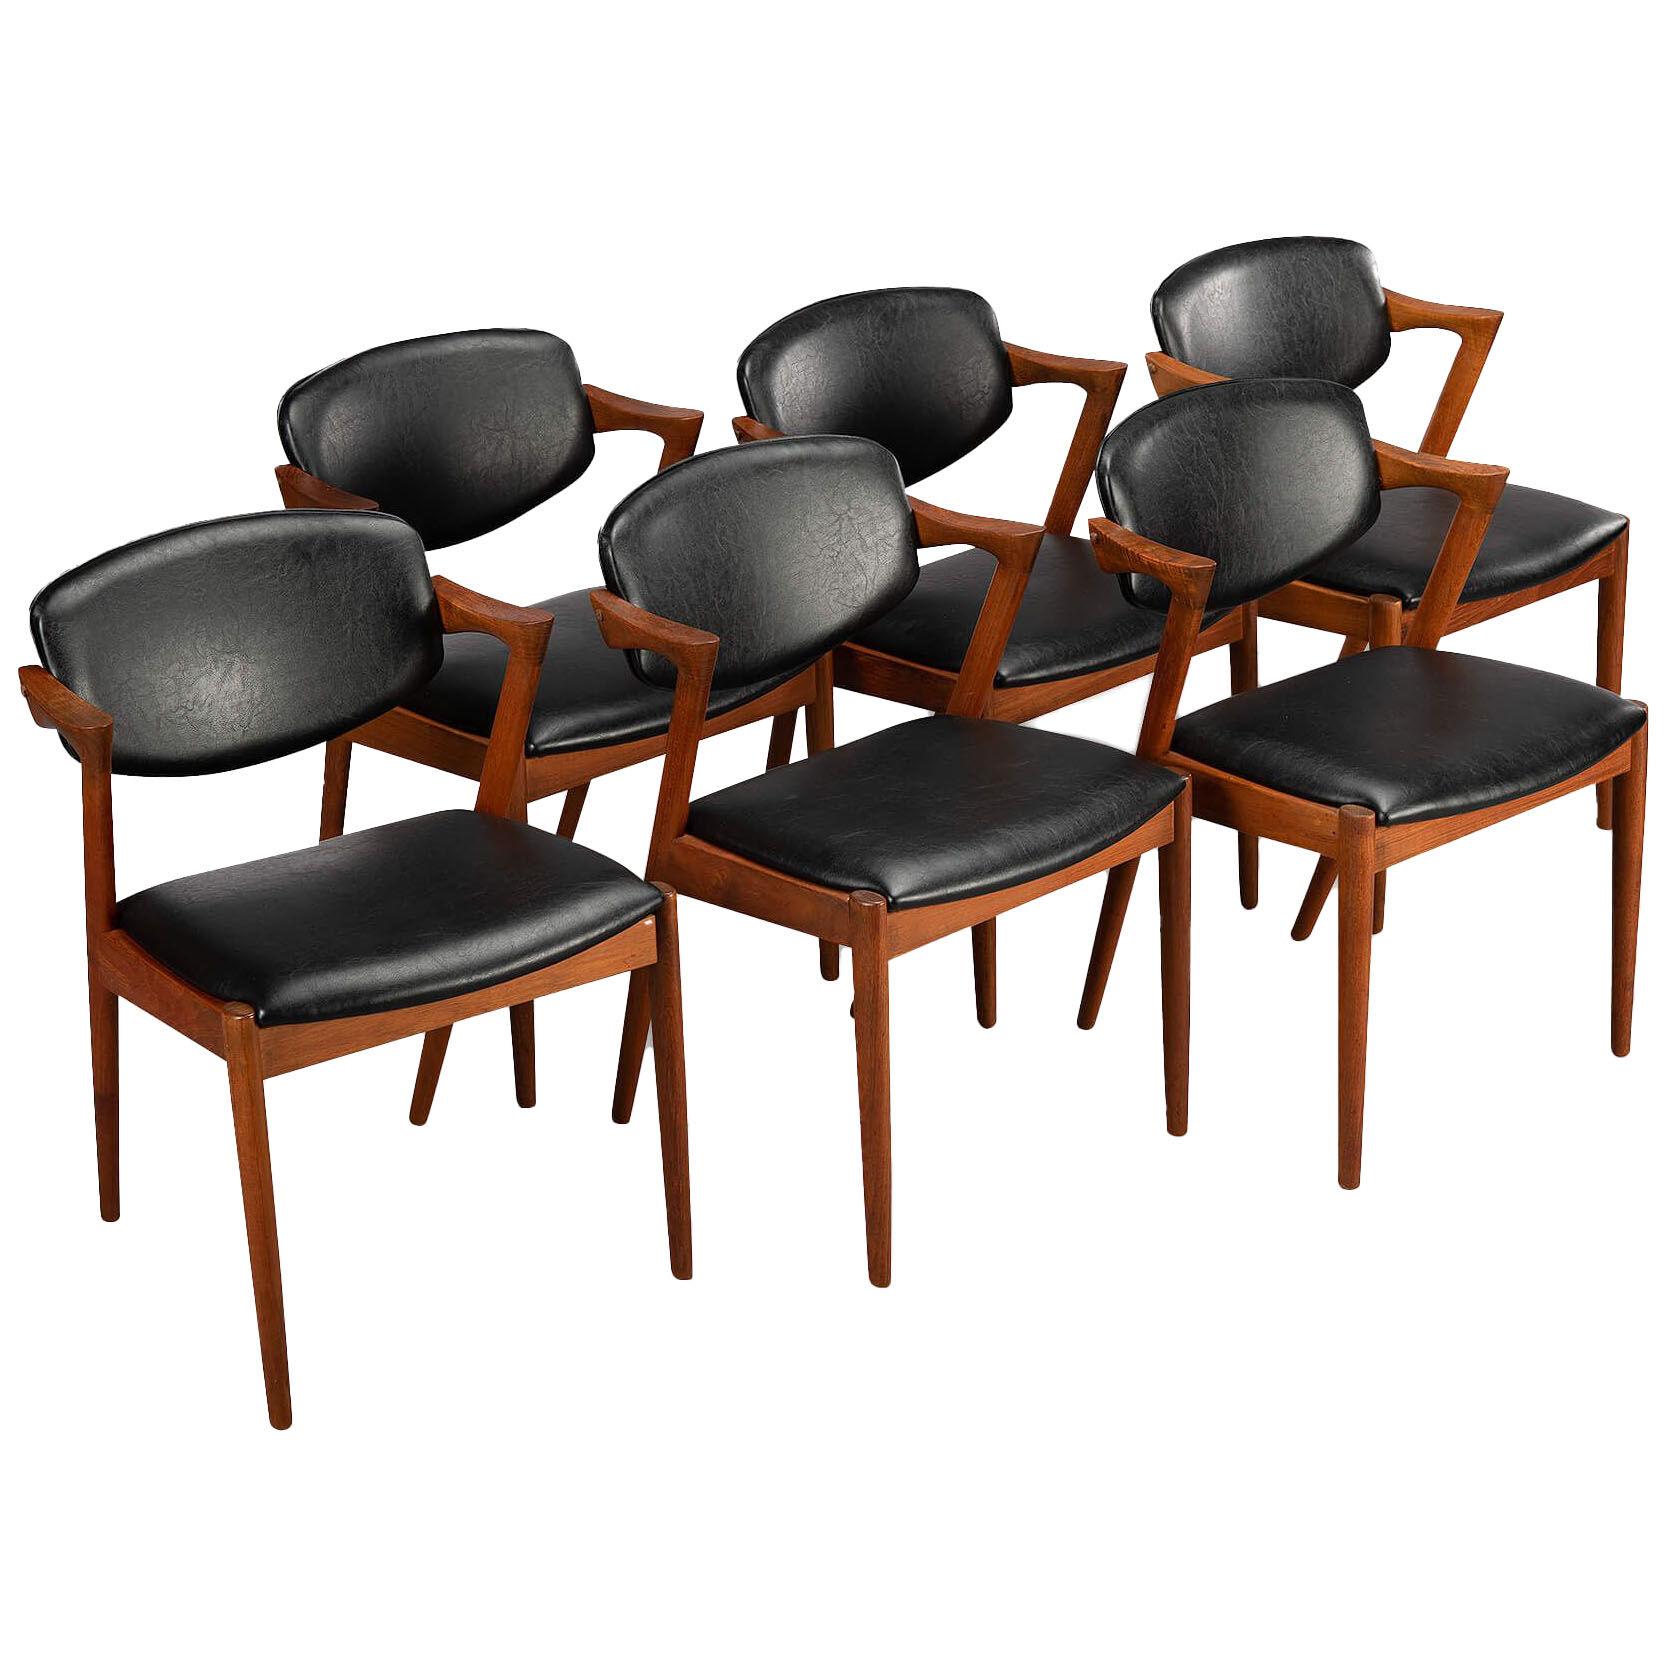 Z chair No.42 by Kai Kristiansen, set of 6